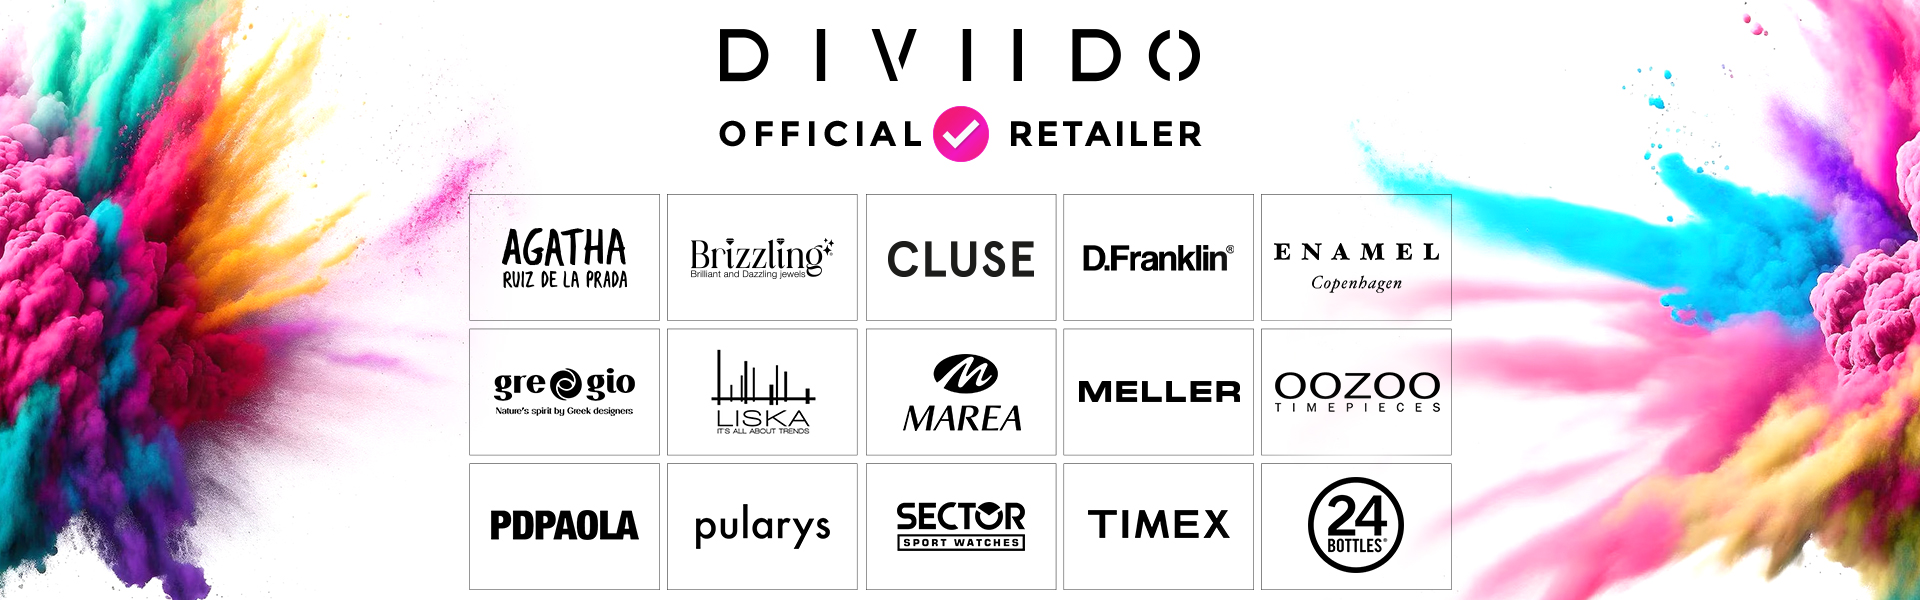 Diviido Fashion Eshop - Official Retailer